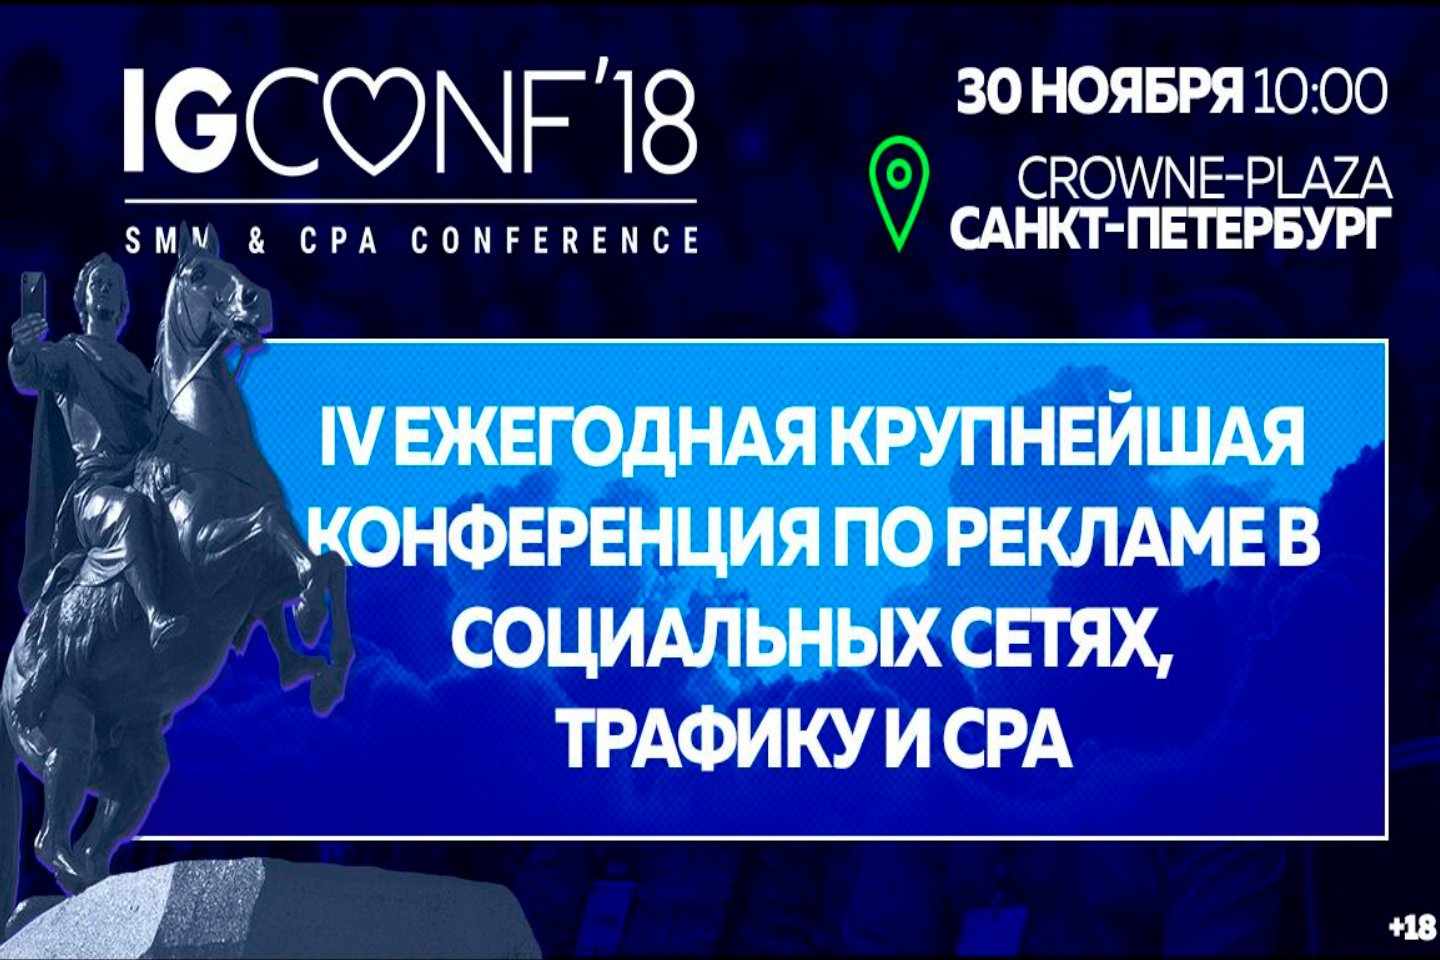 IGCONF 2018 в Санкт-Петербурге, внутри промокод